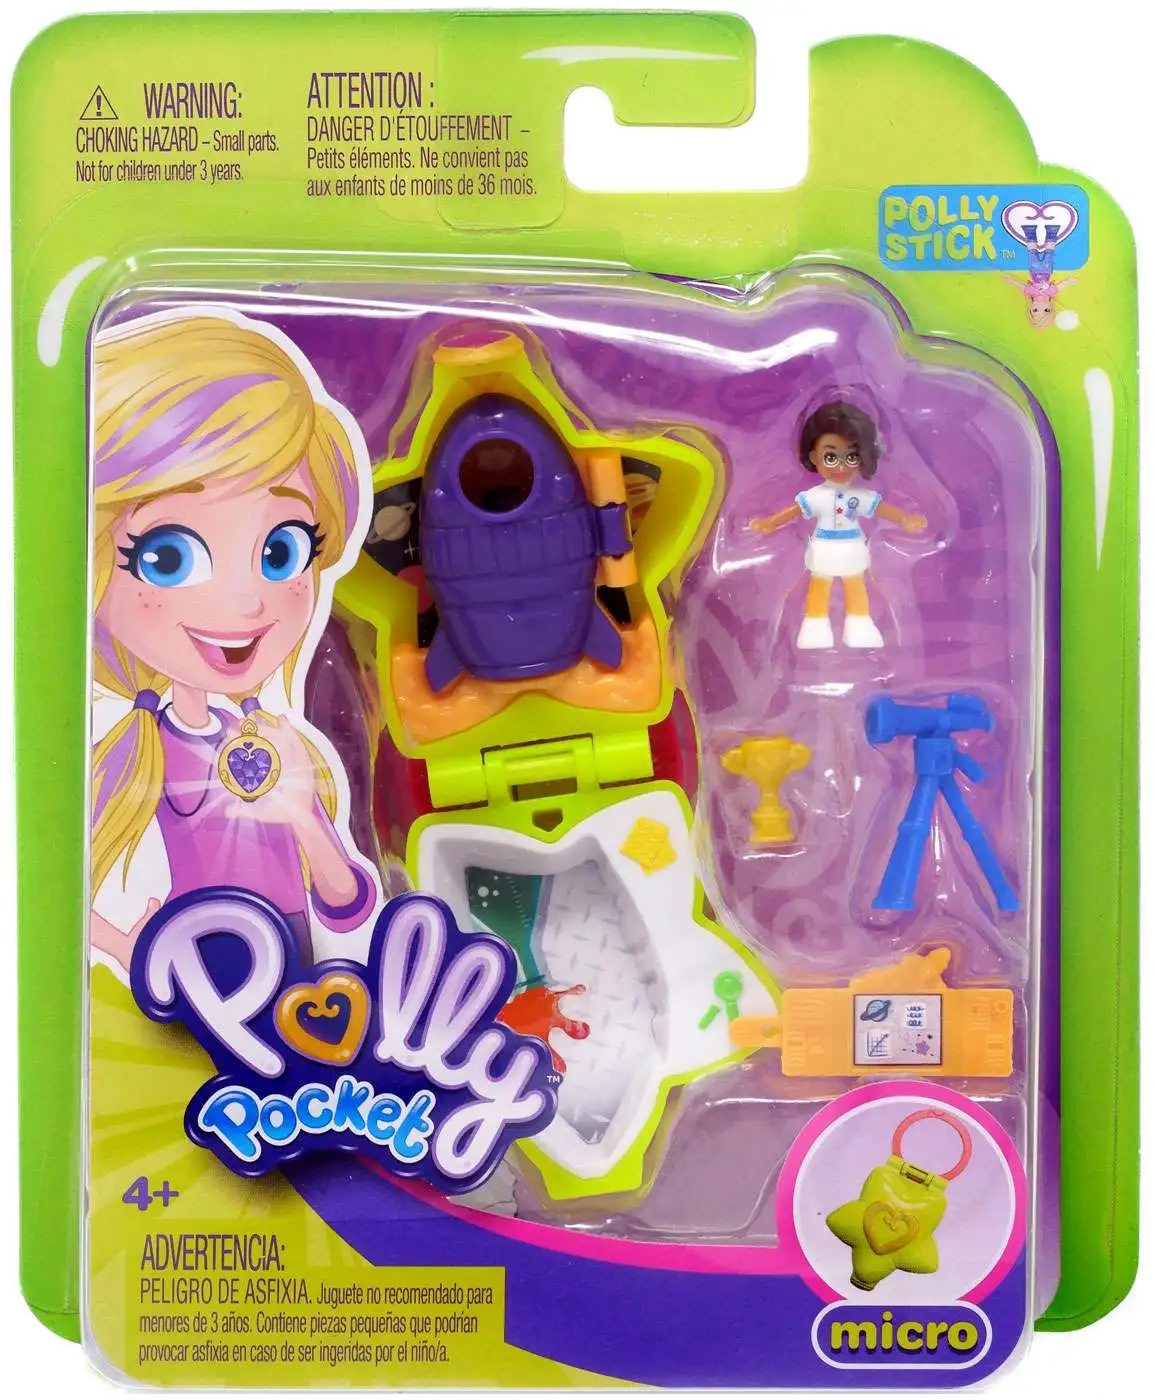 Polly Pocket Micro Rockin Science Playset Mattel Toys - ToyWiz